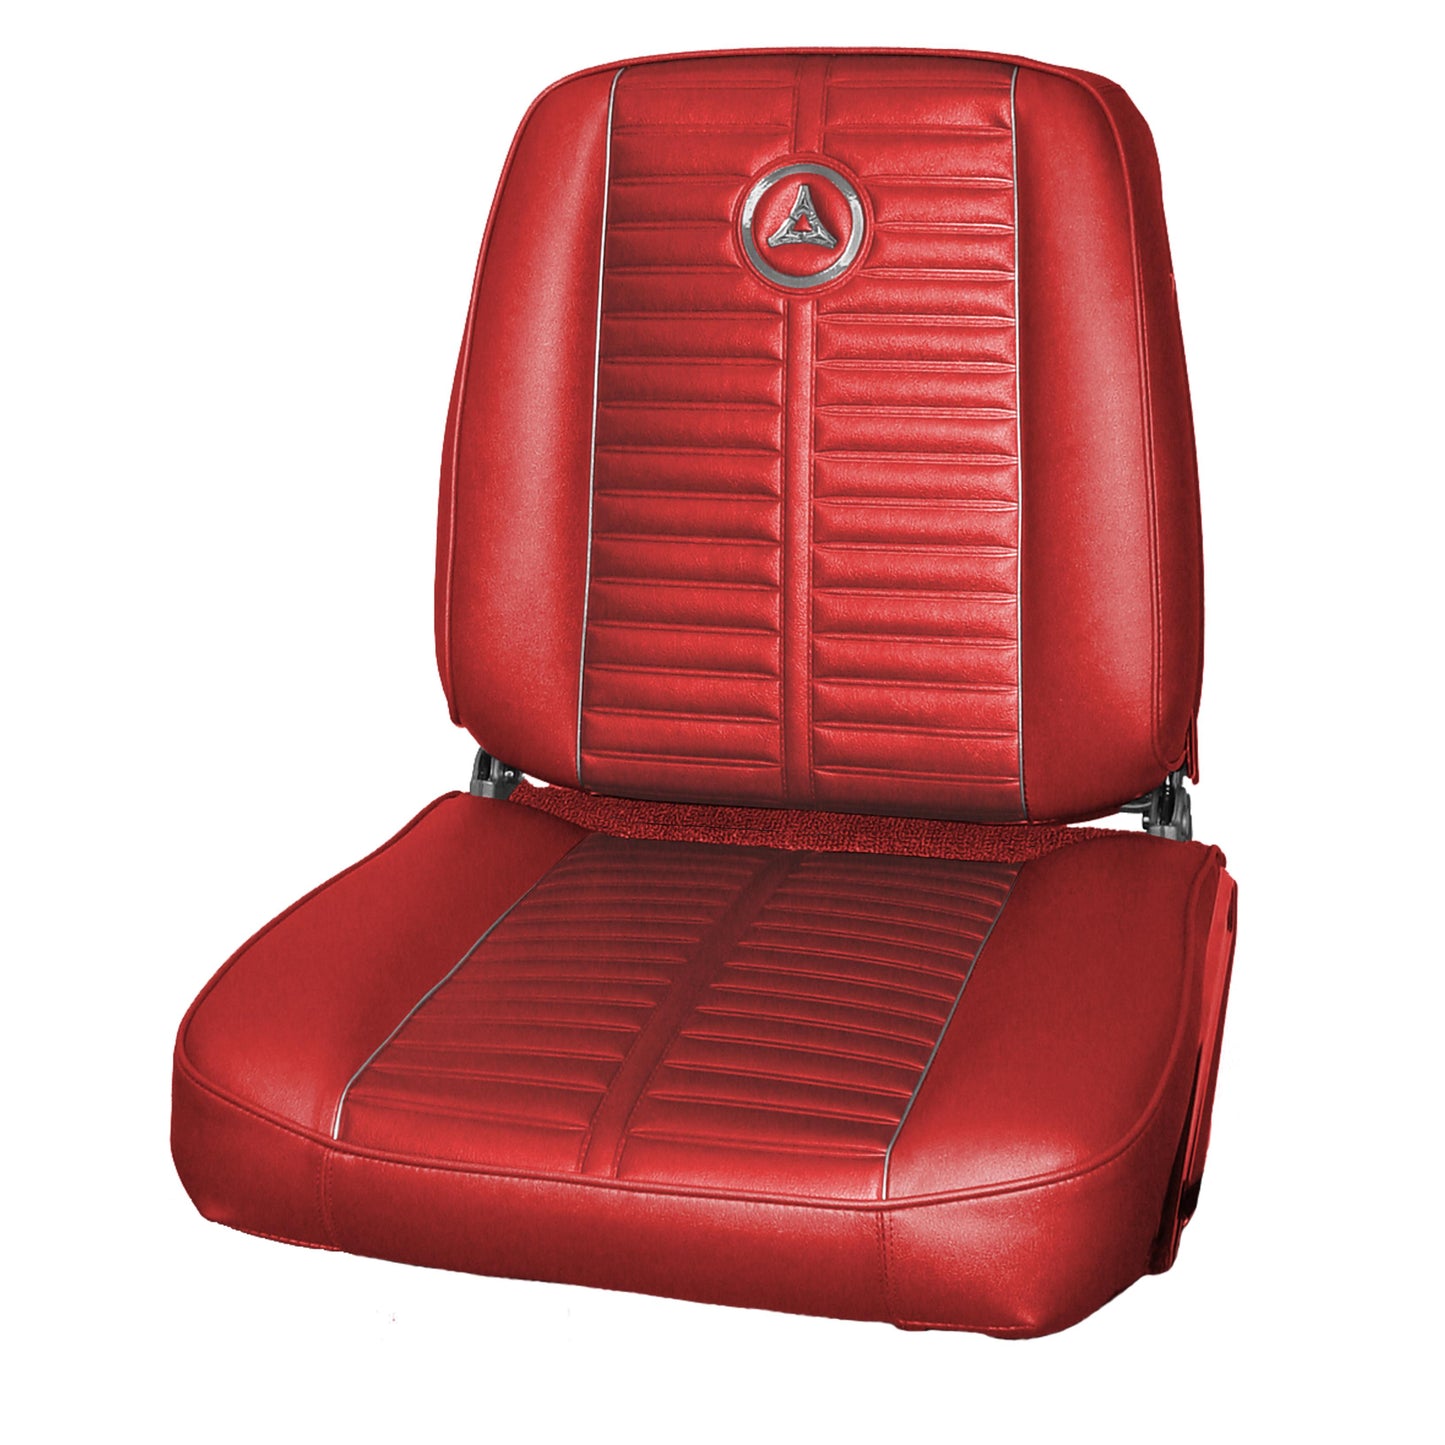 64 DART GT BUCKET SEAT UPH - RED W/ SILVER TINSL WELT